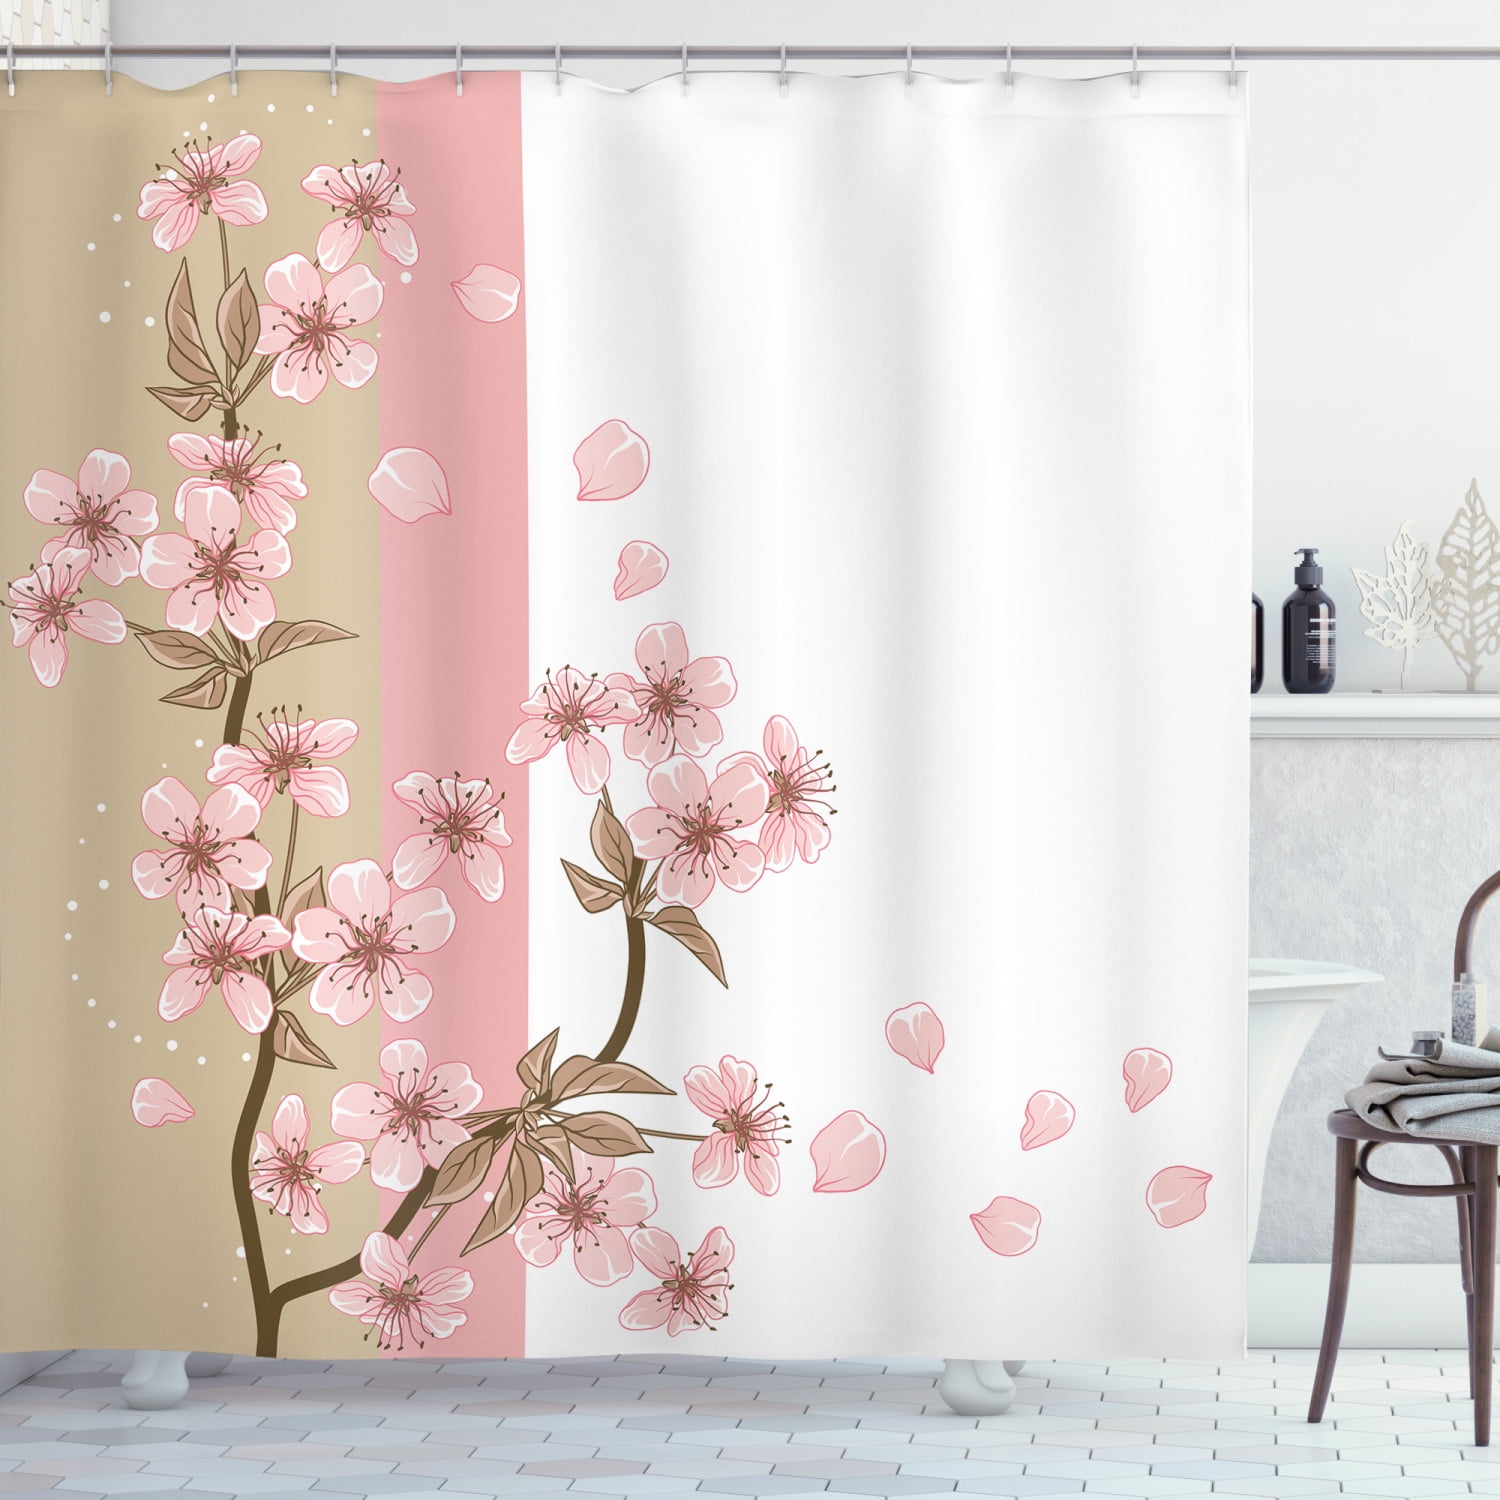 Japanese Sakura Cherry Blossom Shower Curtain Bathroom Fabric & 12hooks 71*71in 